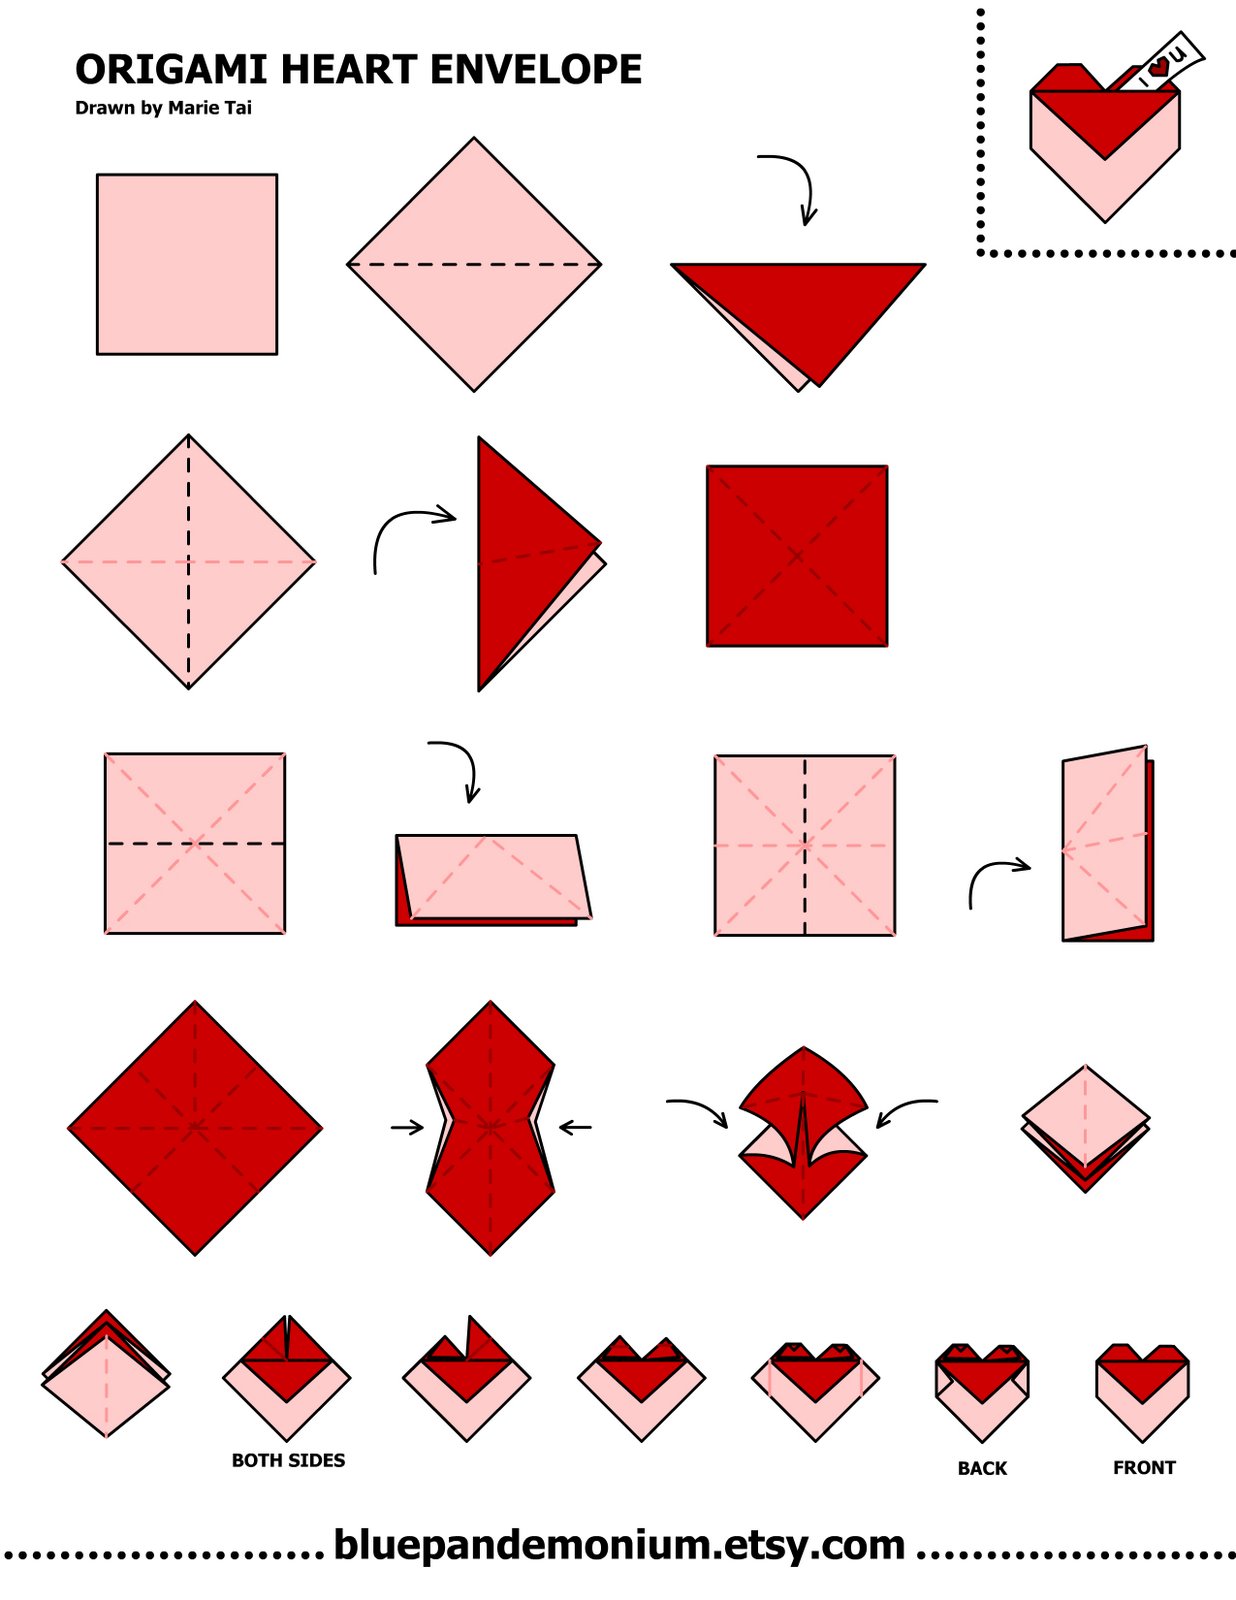 Origami_Heart_Envelope_Tutorial.jpg